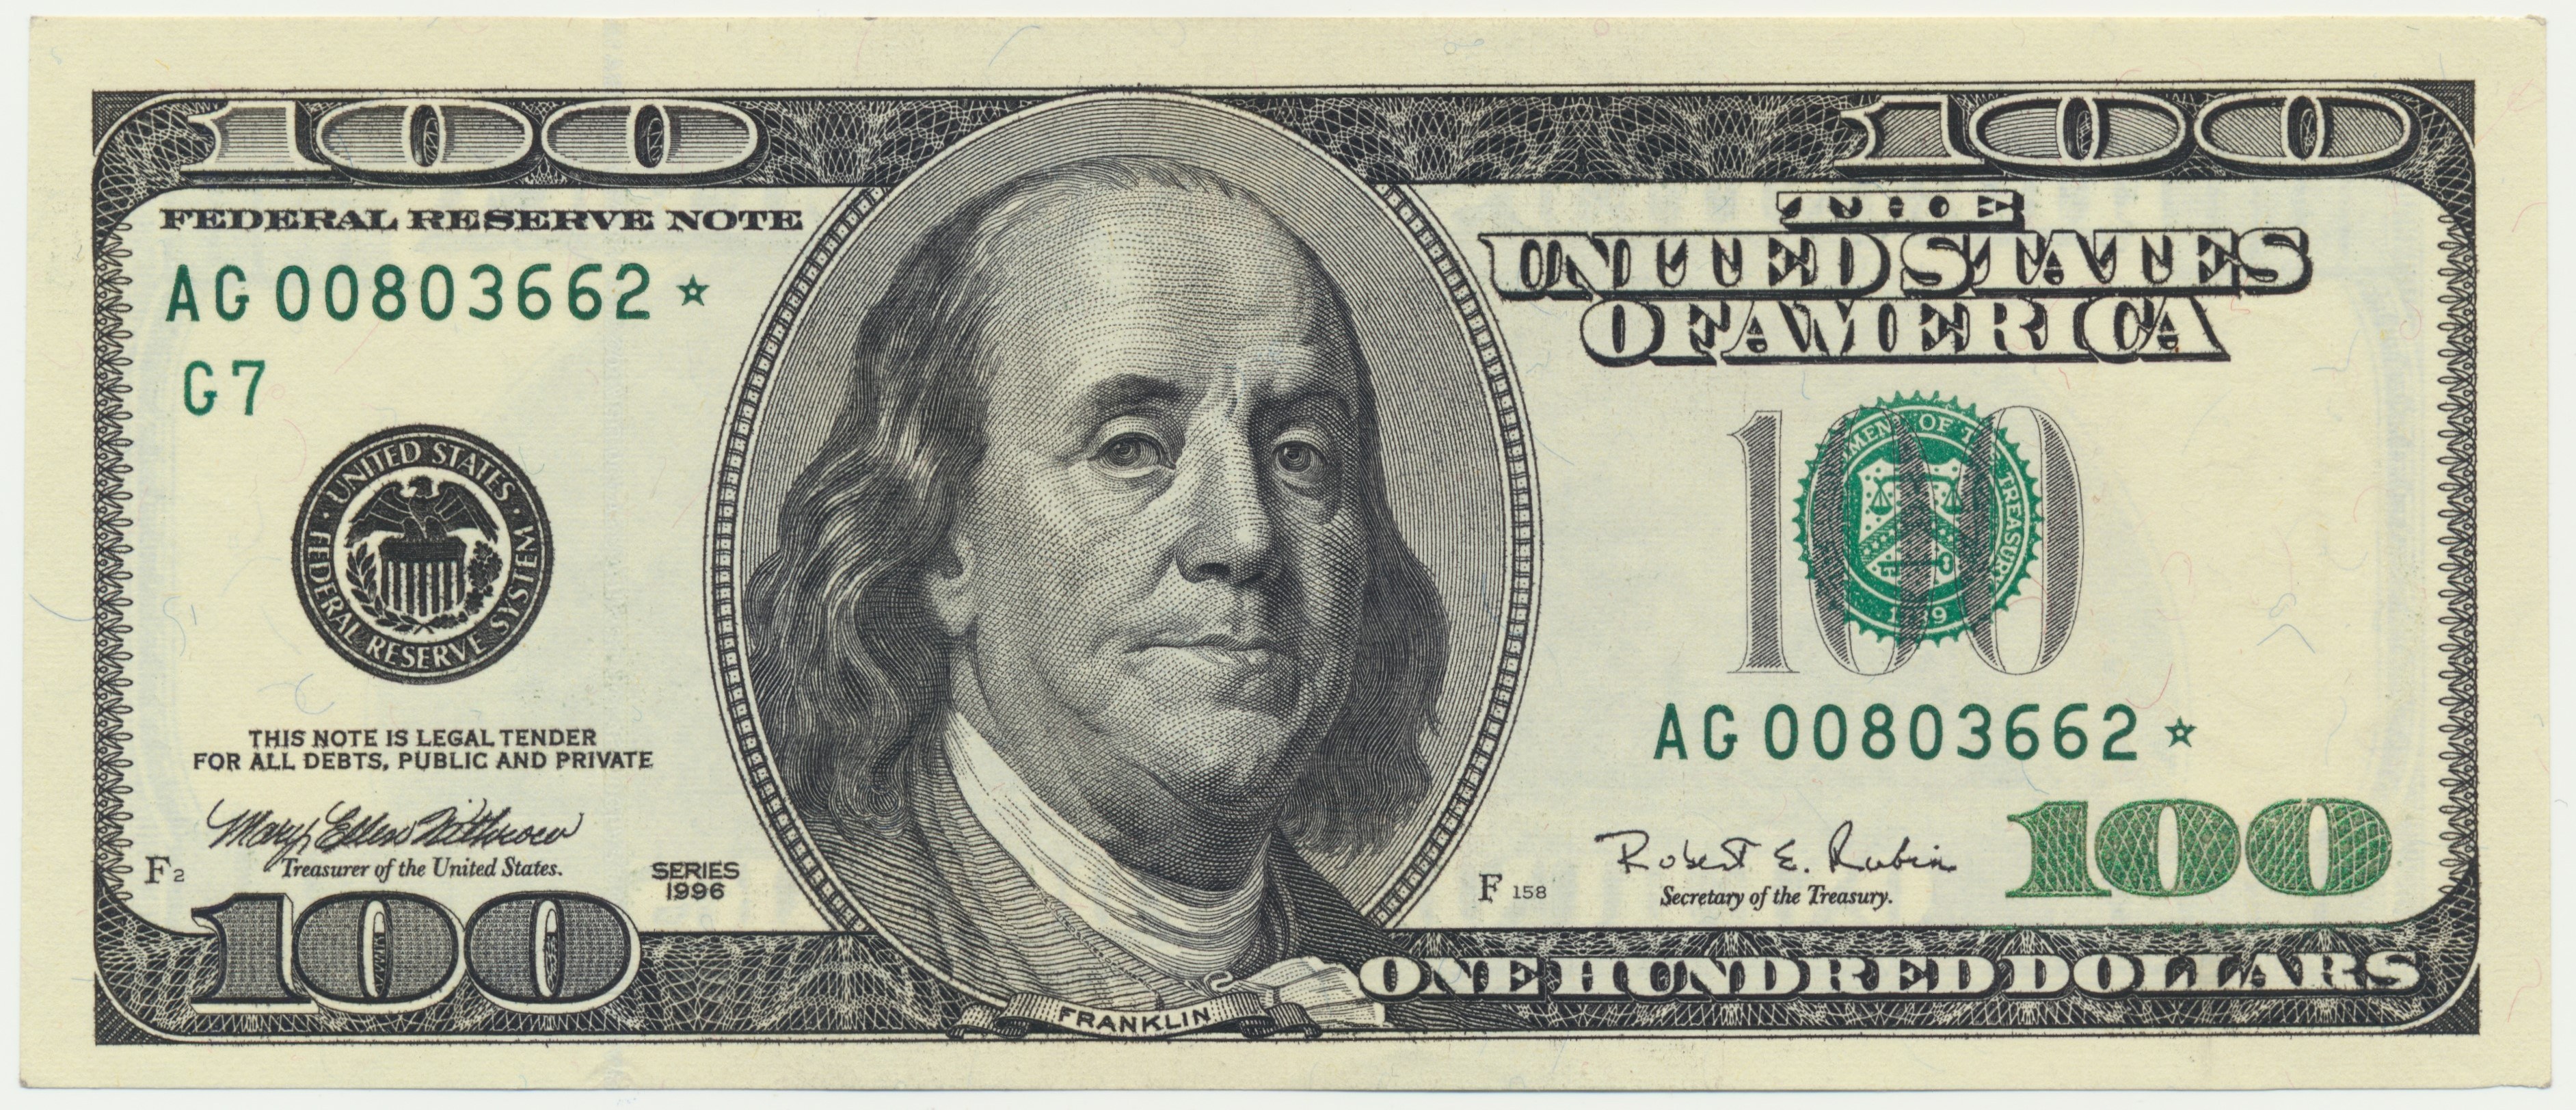 115 долларов. Бенджамин Франклин на 100 долларах. 100 Долларовая купюра с Бенджамином Франклином. Купюра 100 долларов 1996. Бенджамин Франклин фото на 100 долларах.